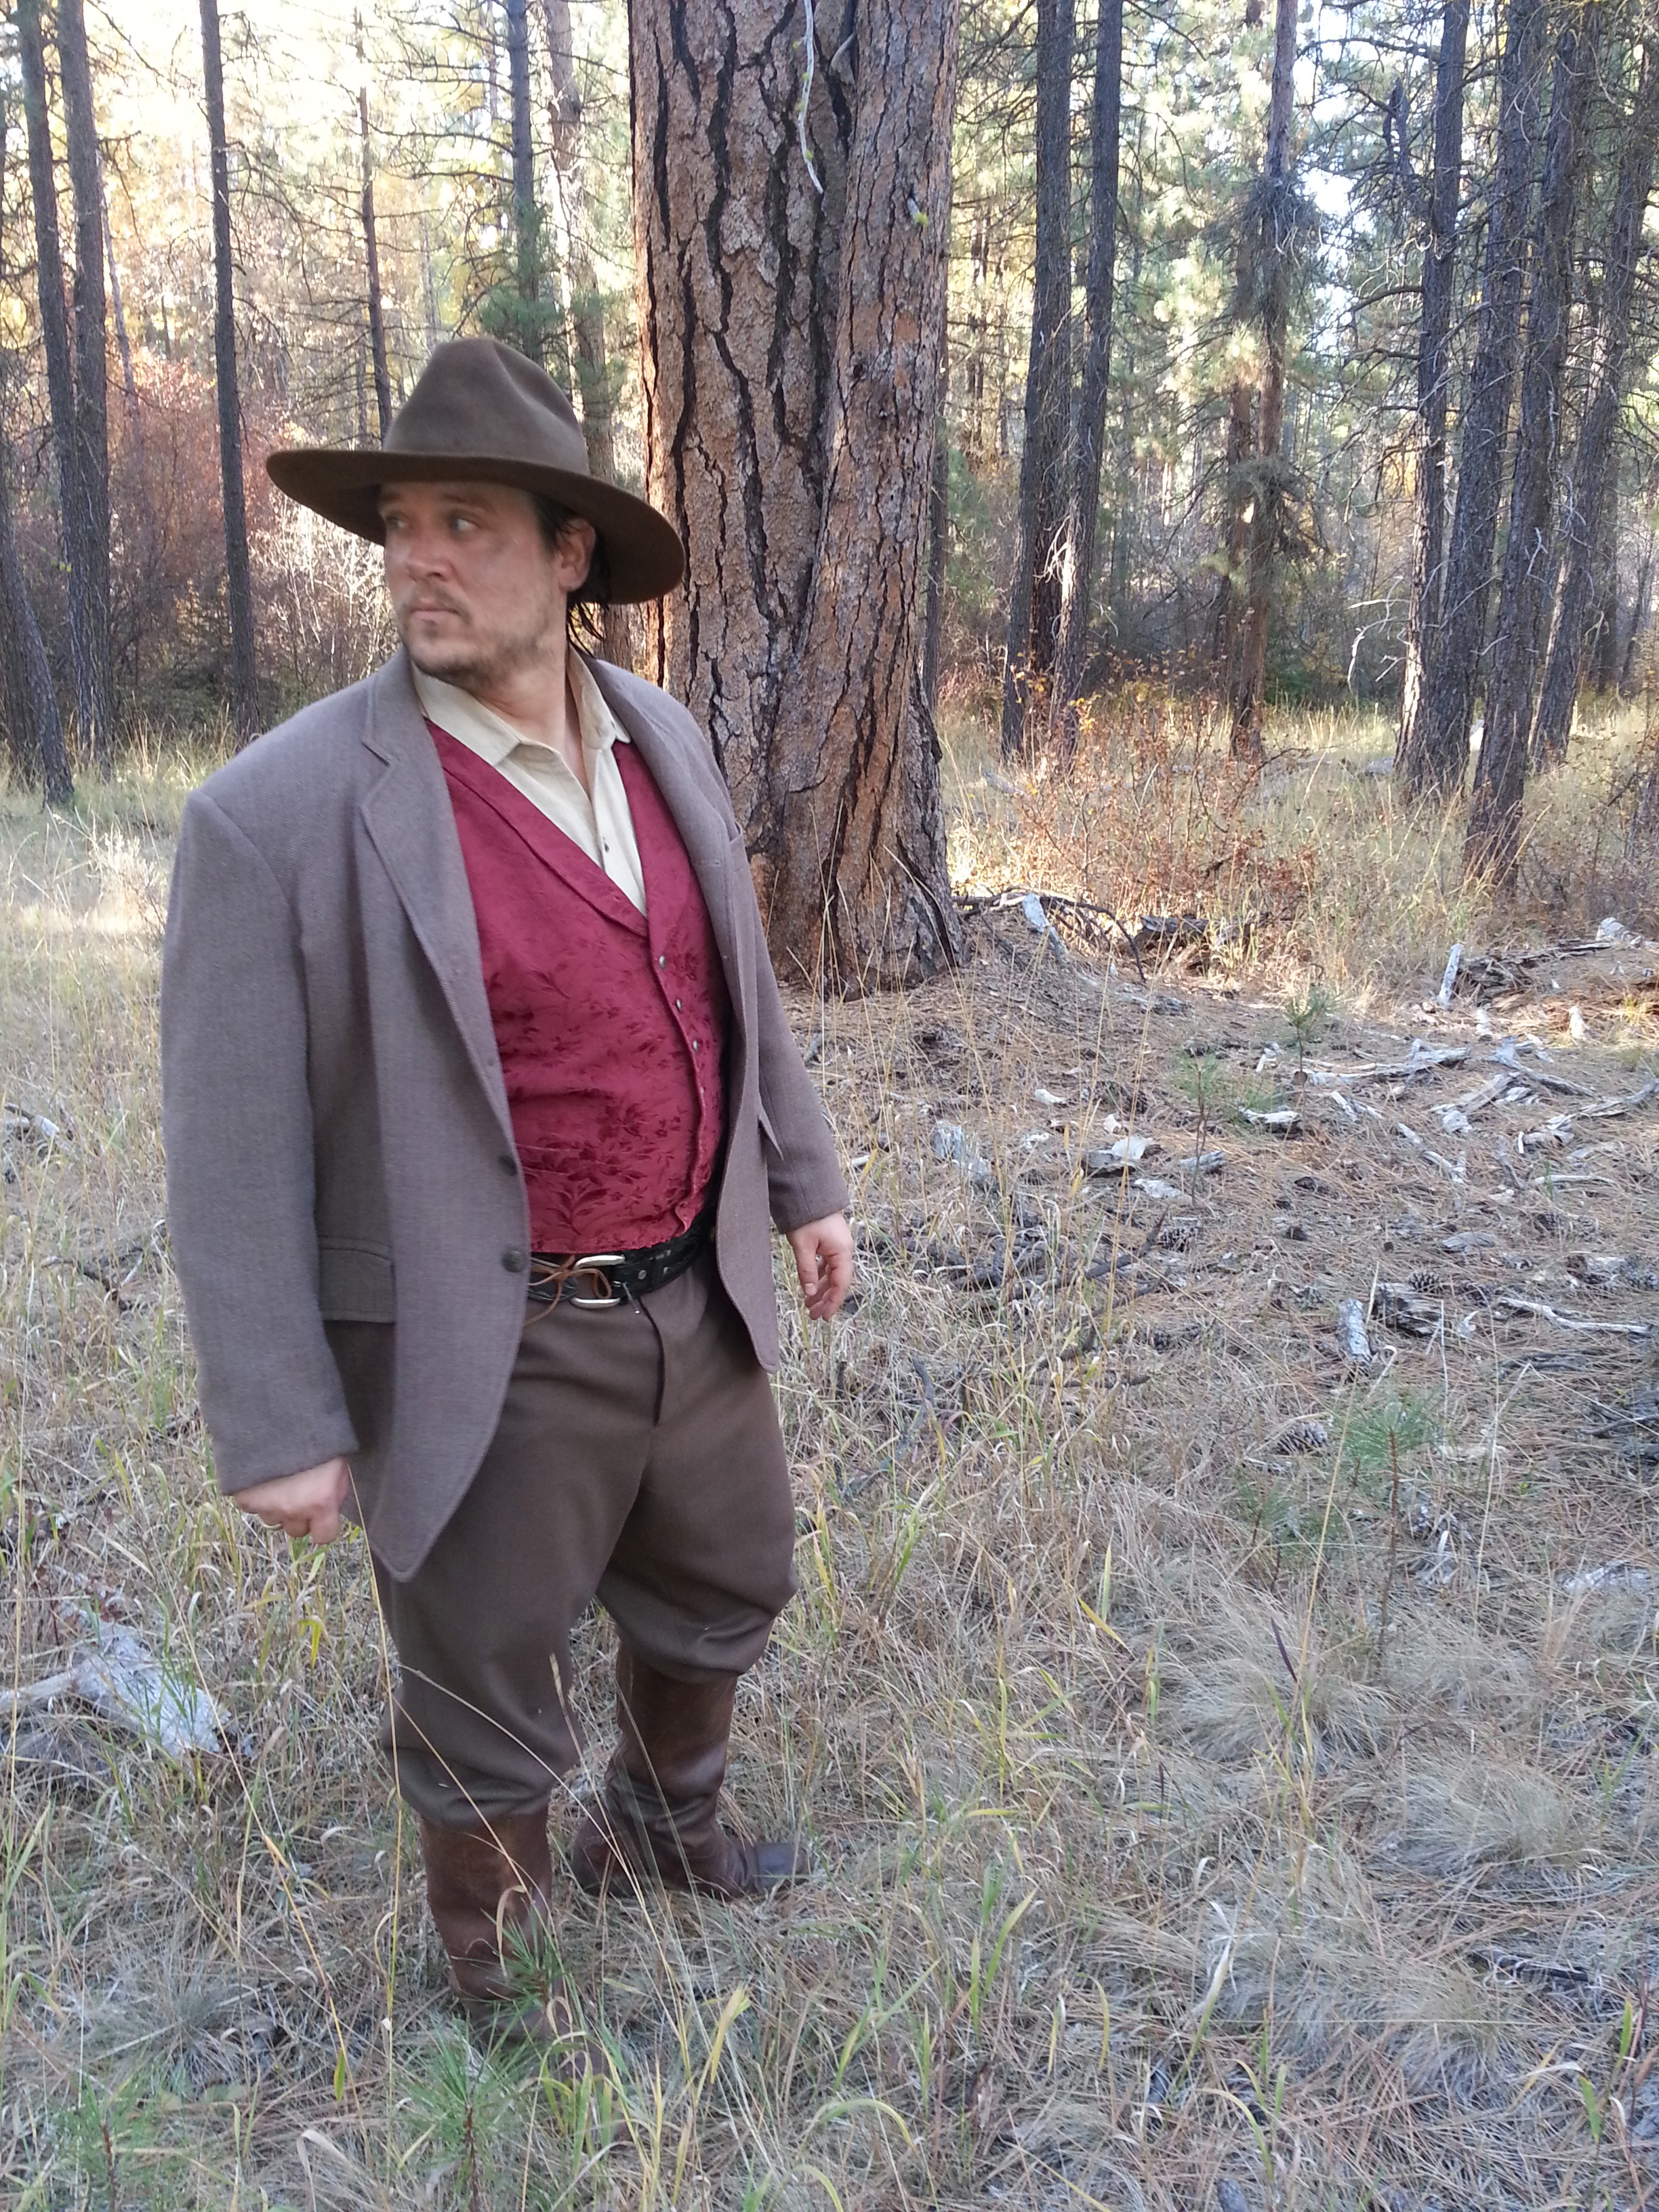 Brian as Biggs, on location in Oregon in 